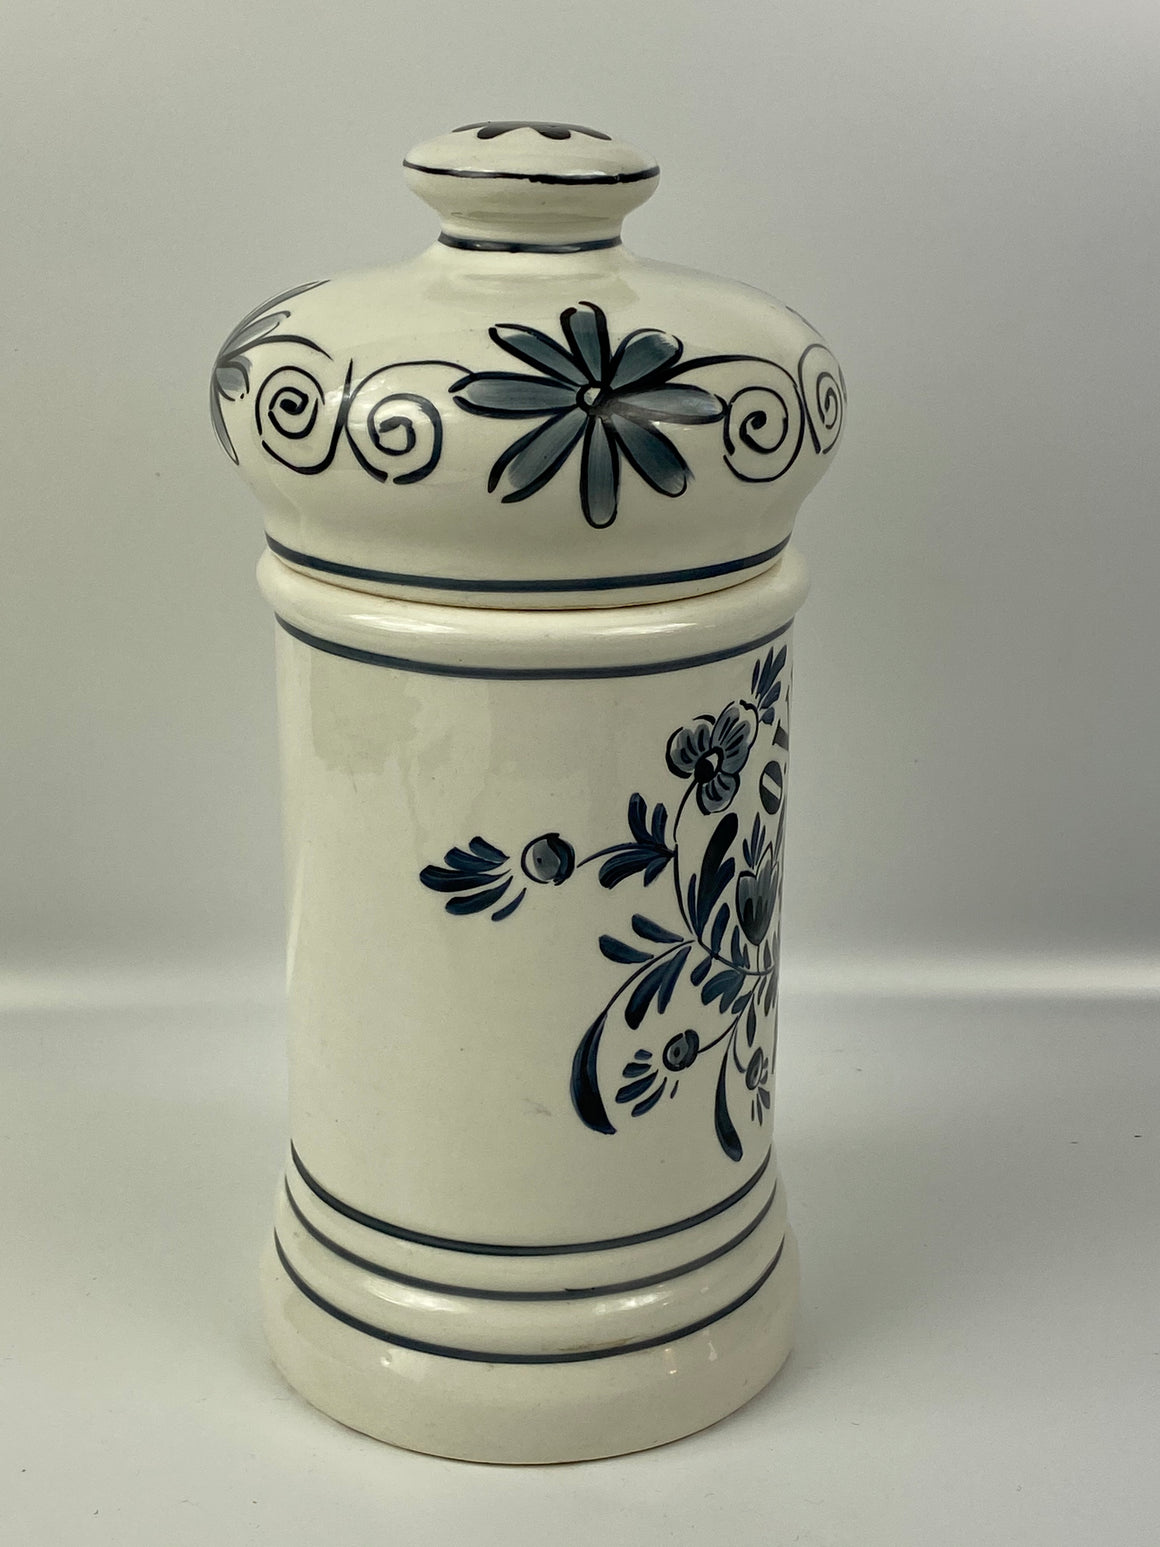  Vintage Spain Apothecary Jar O.Violarum